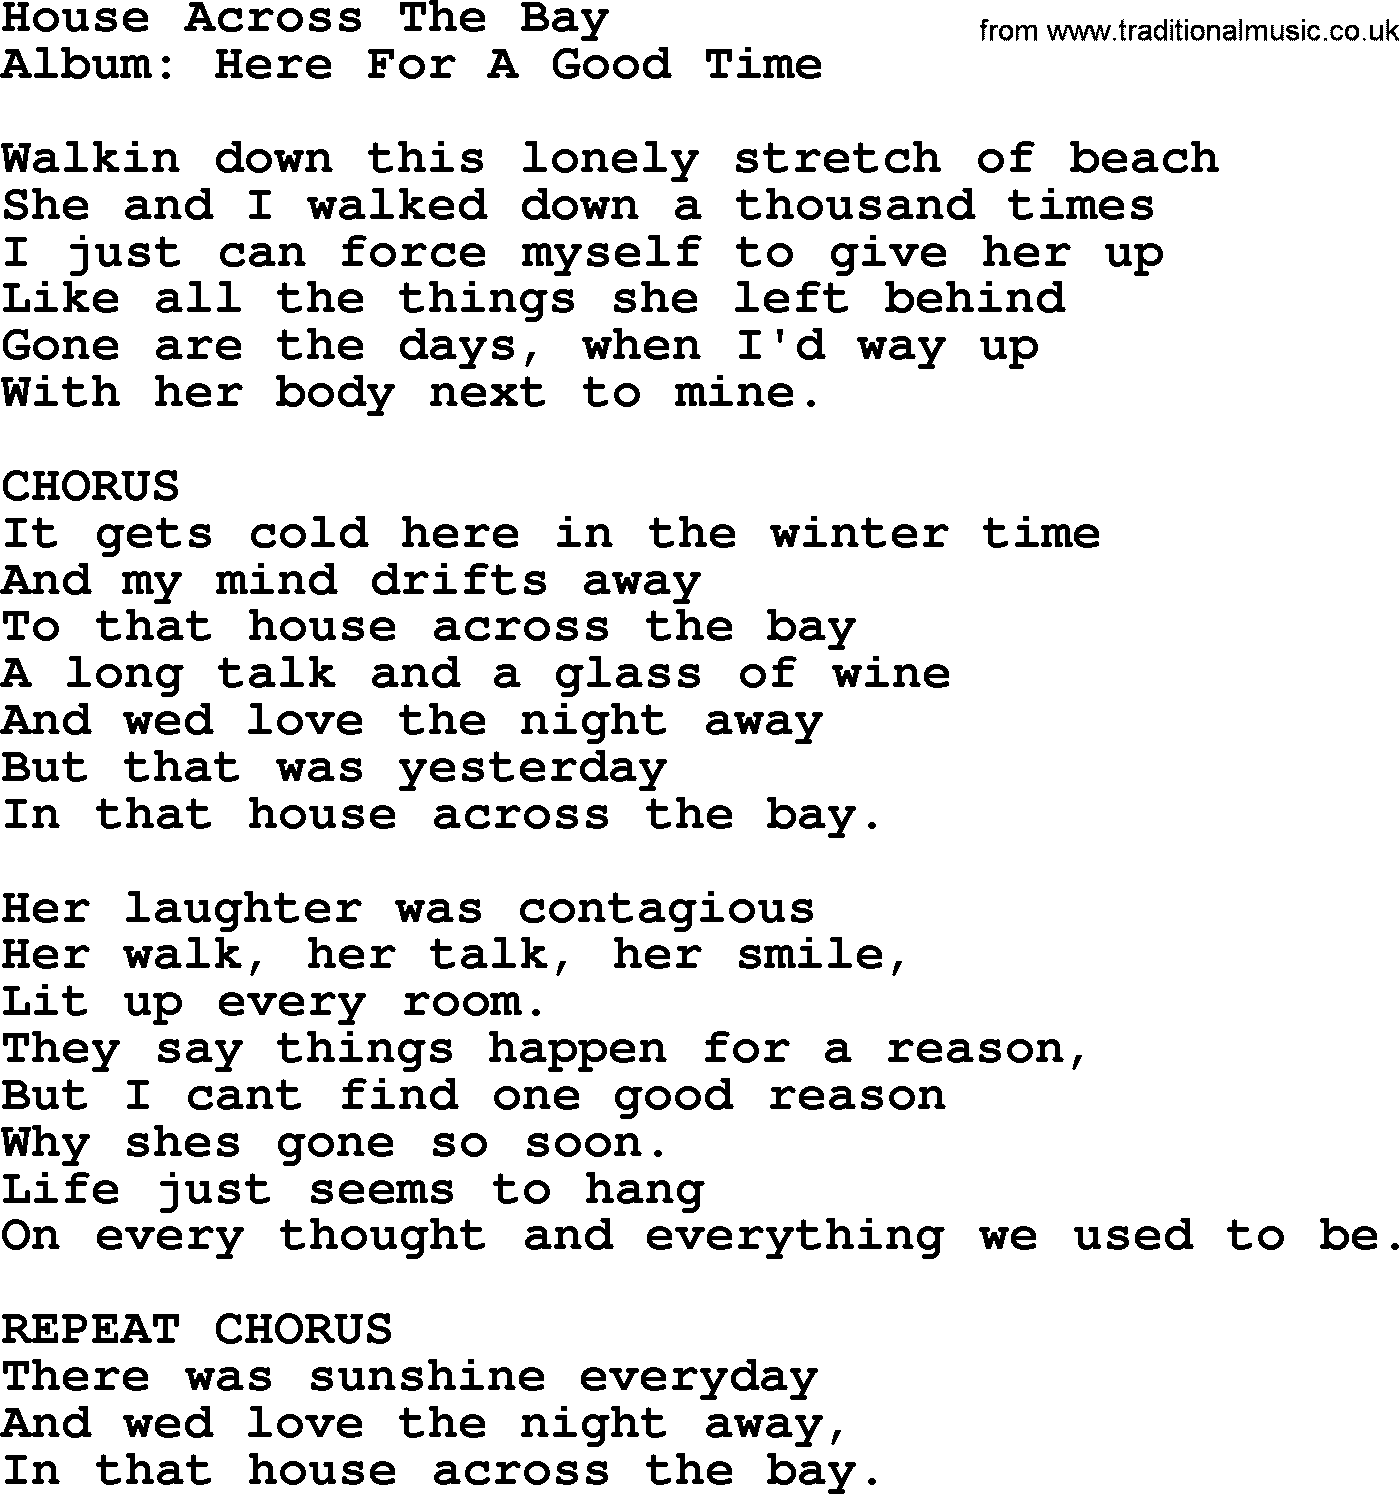 George Strait song: House Across The Bay, lyrics